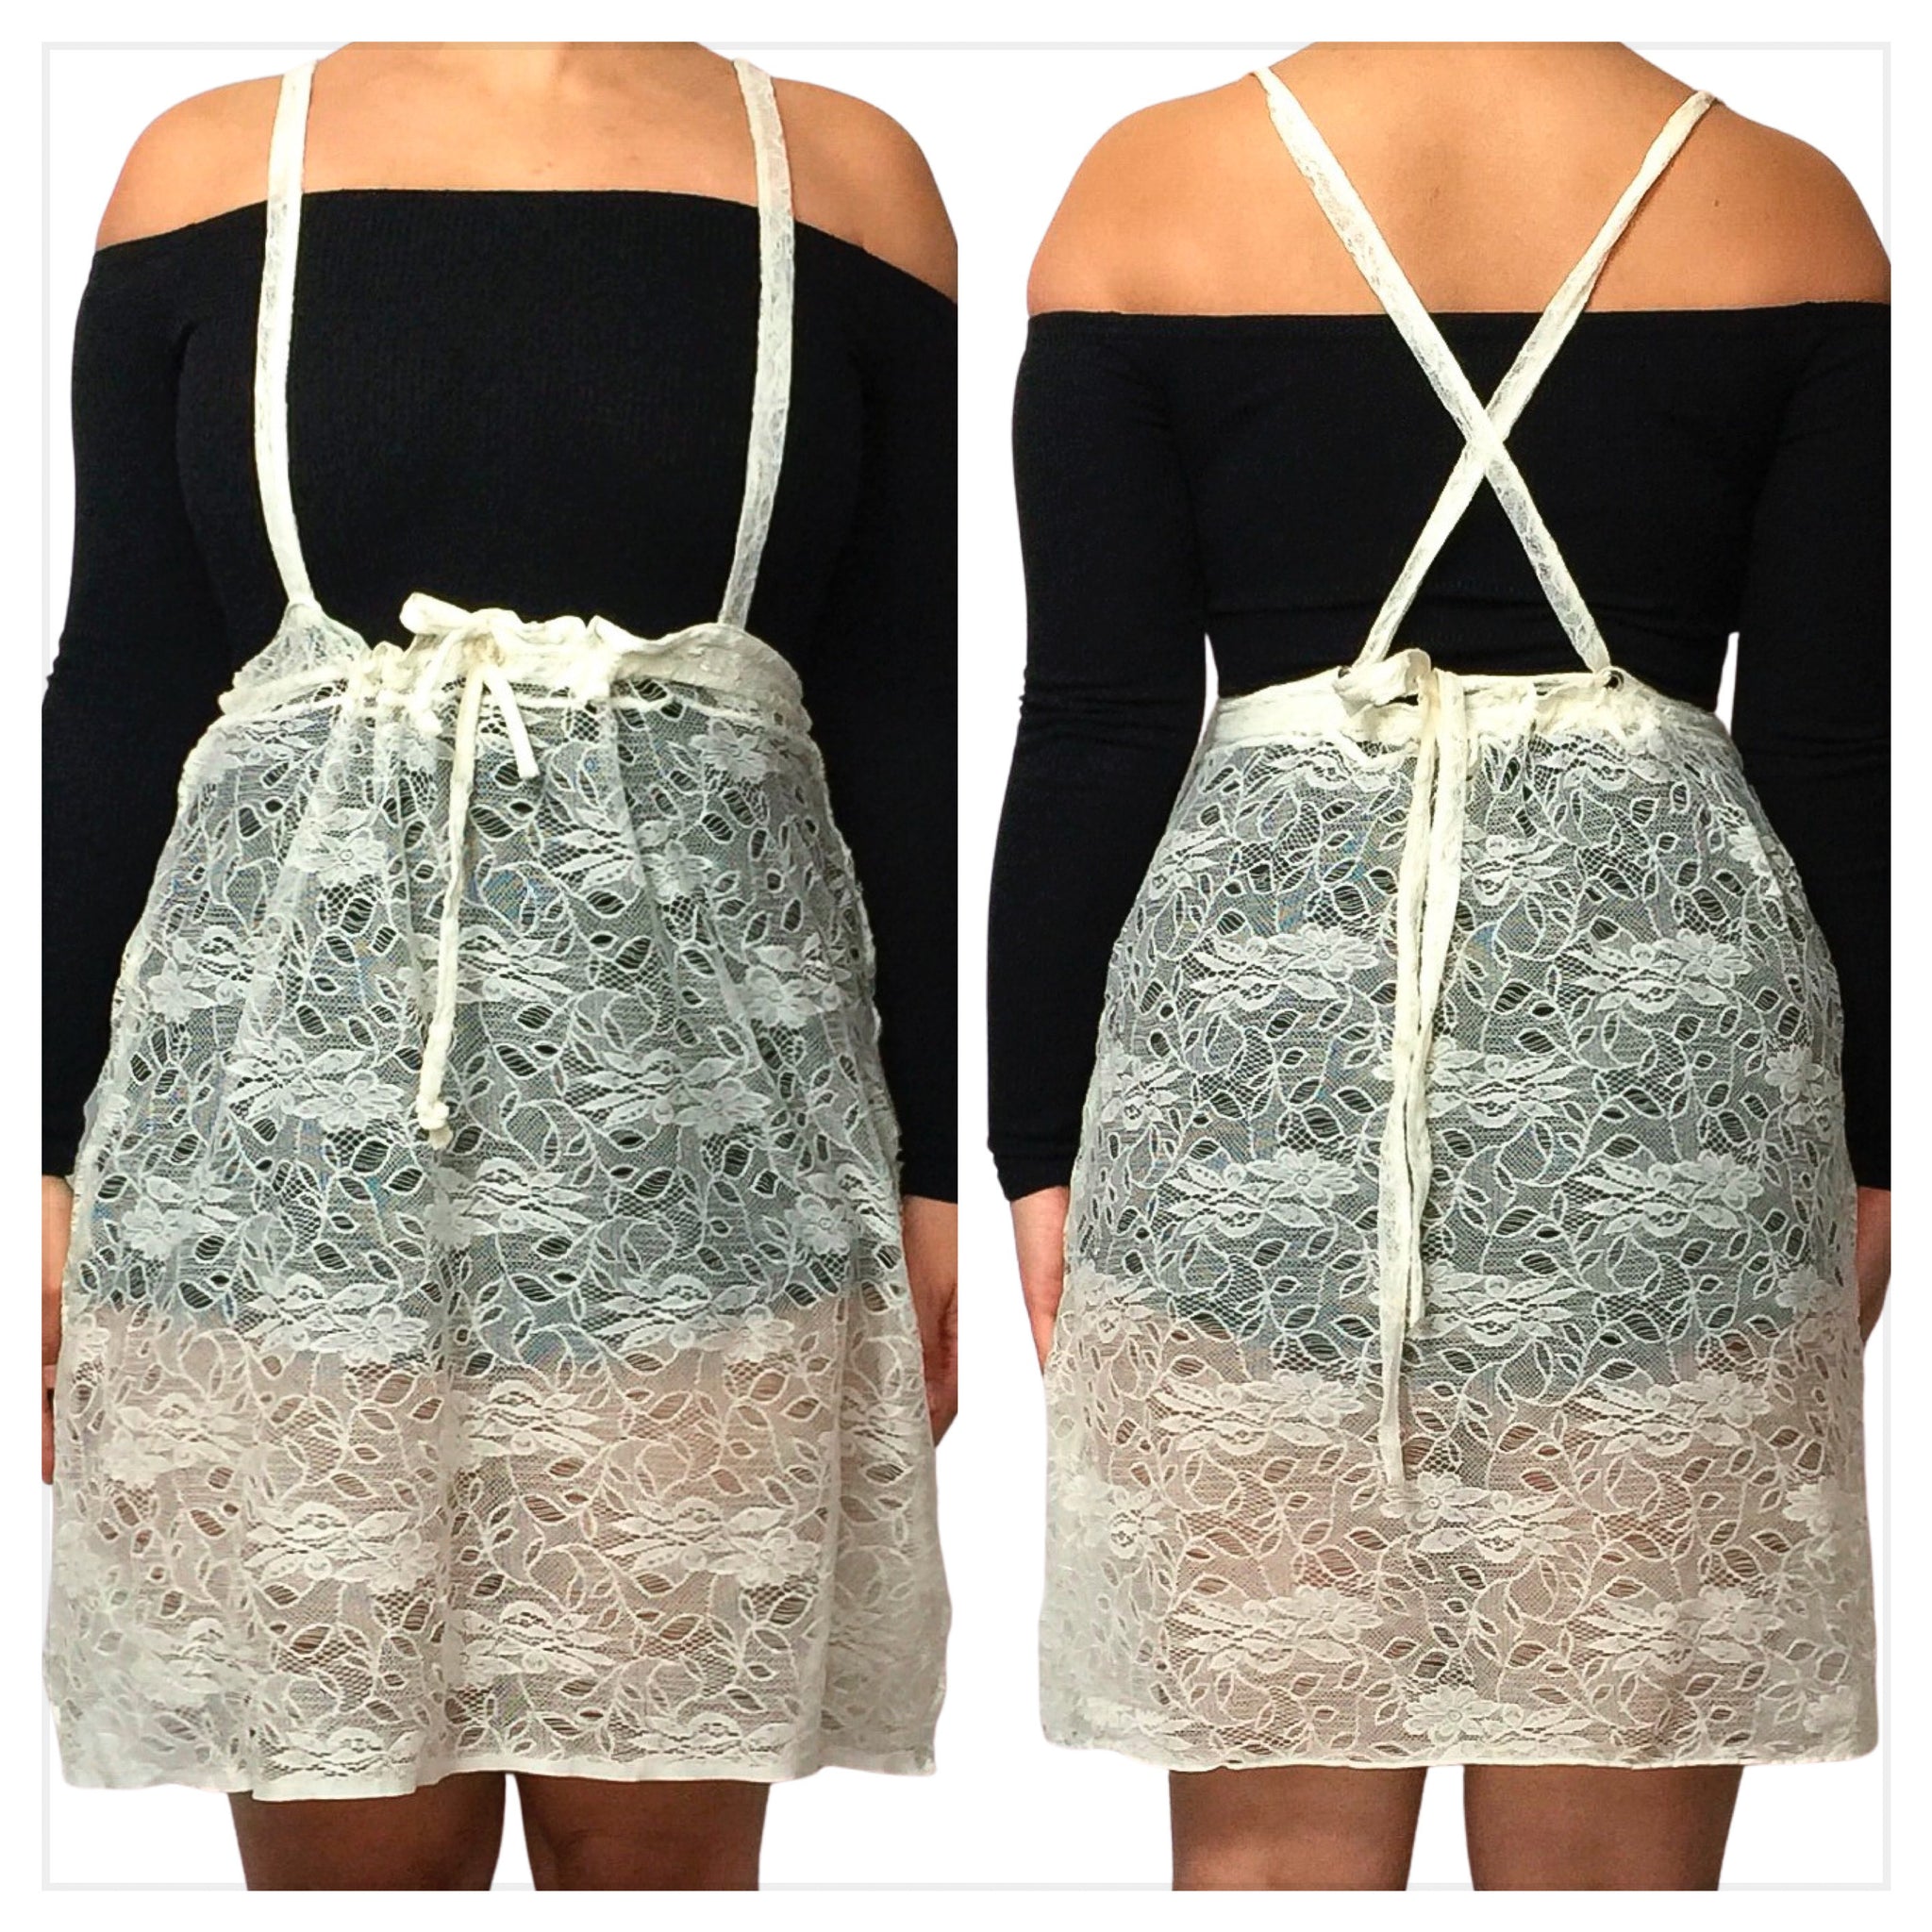 Strappy skirt